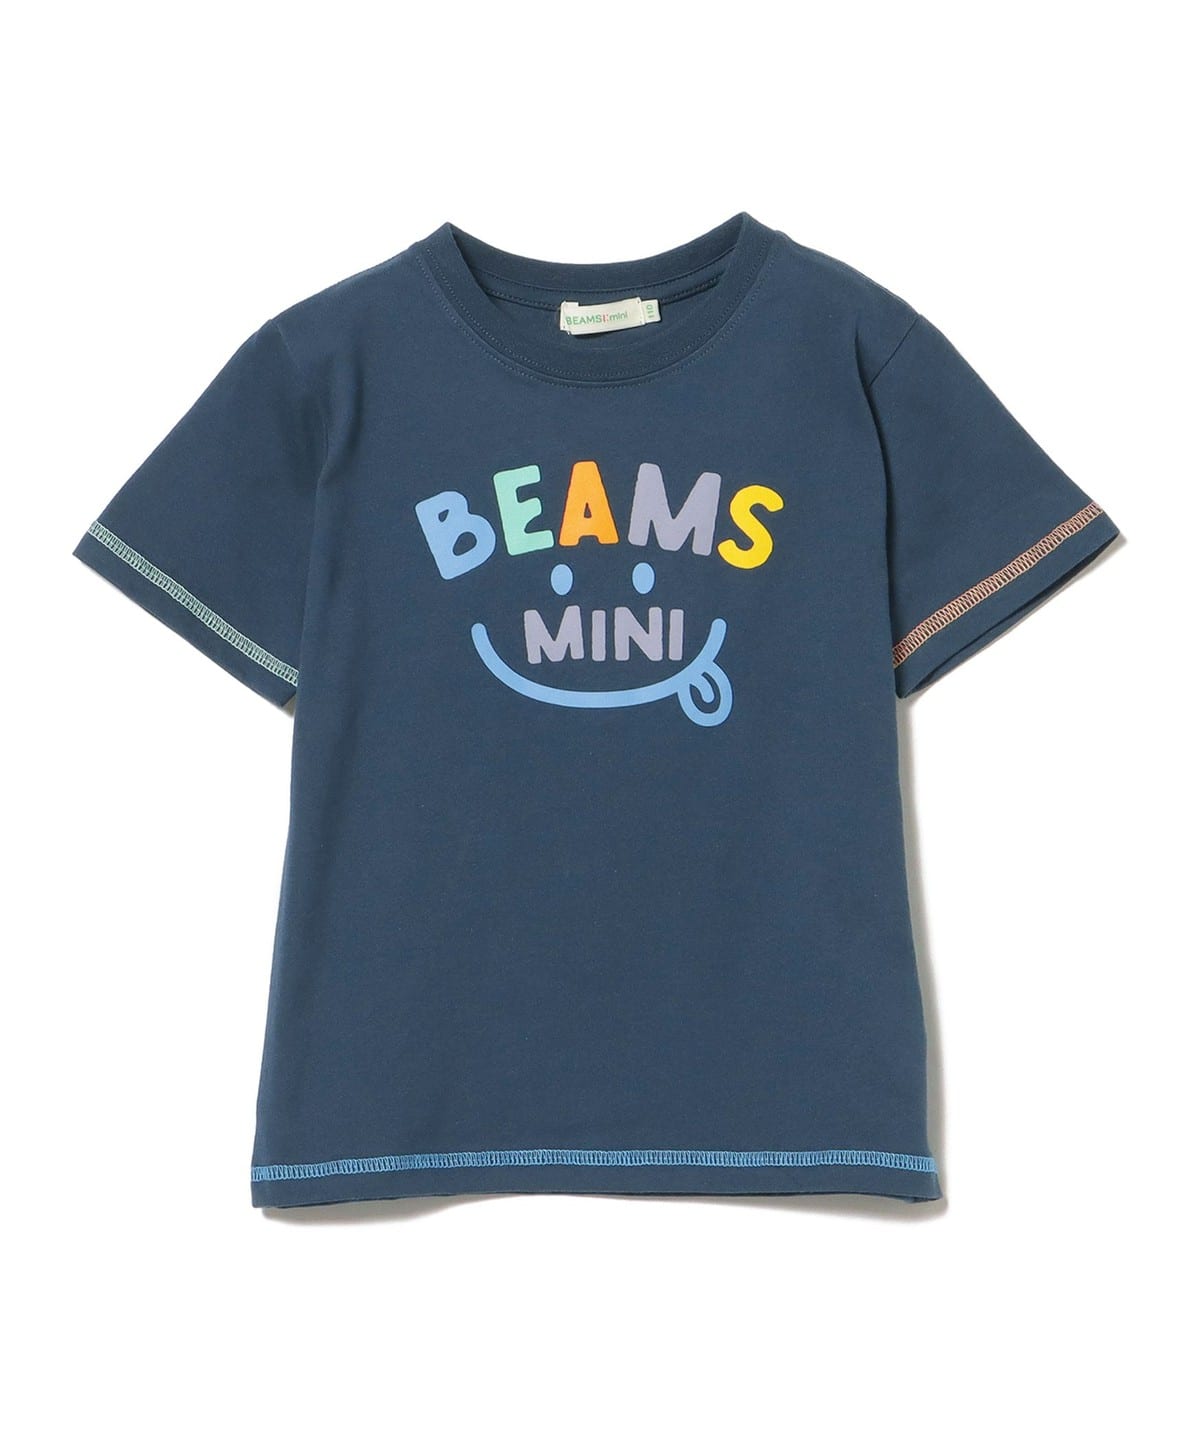 BEAMS mini 男女兼用 ユニセックス ロゴTシャツ 子供服 110 黒-